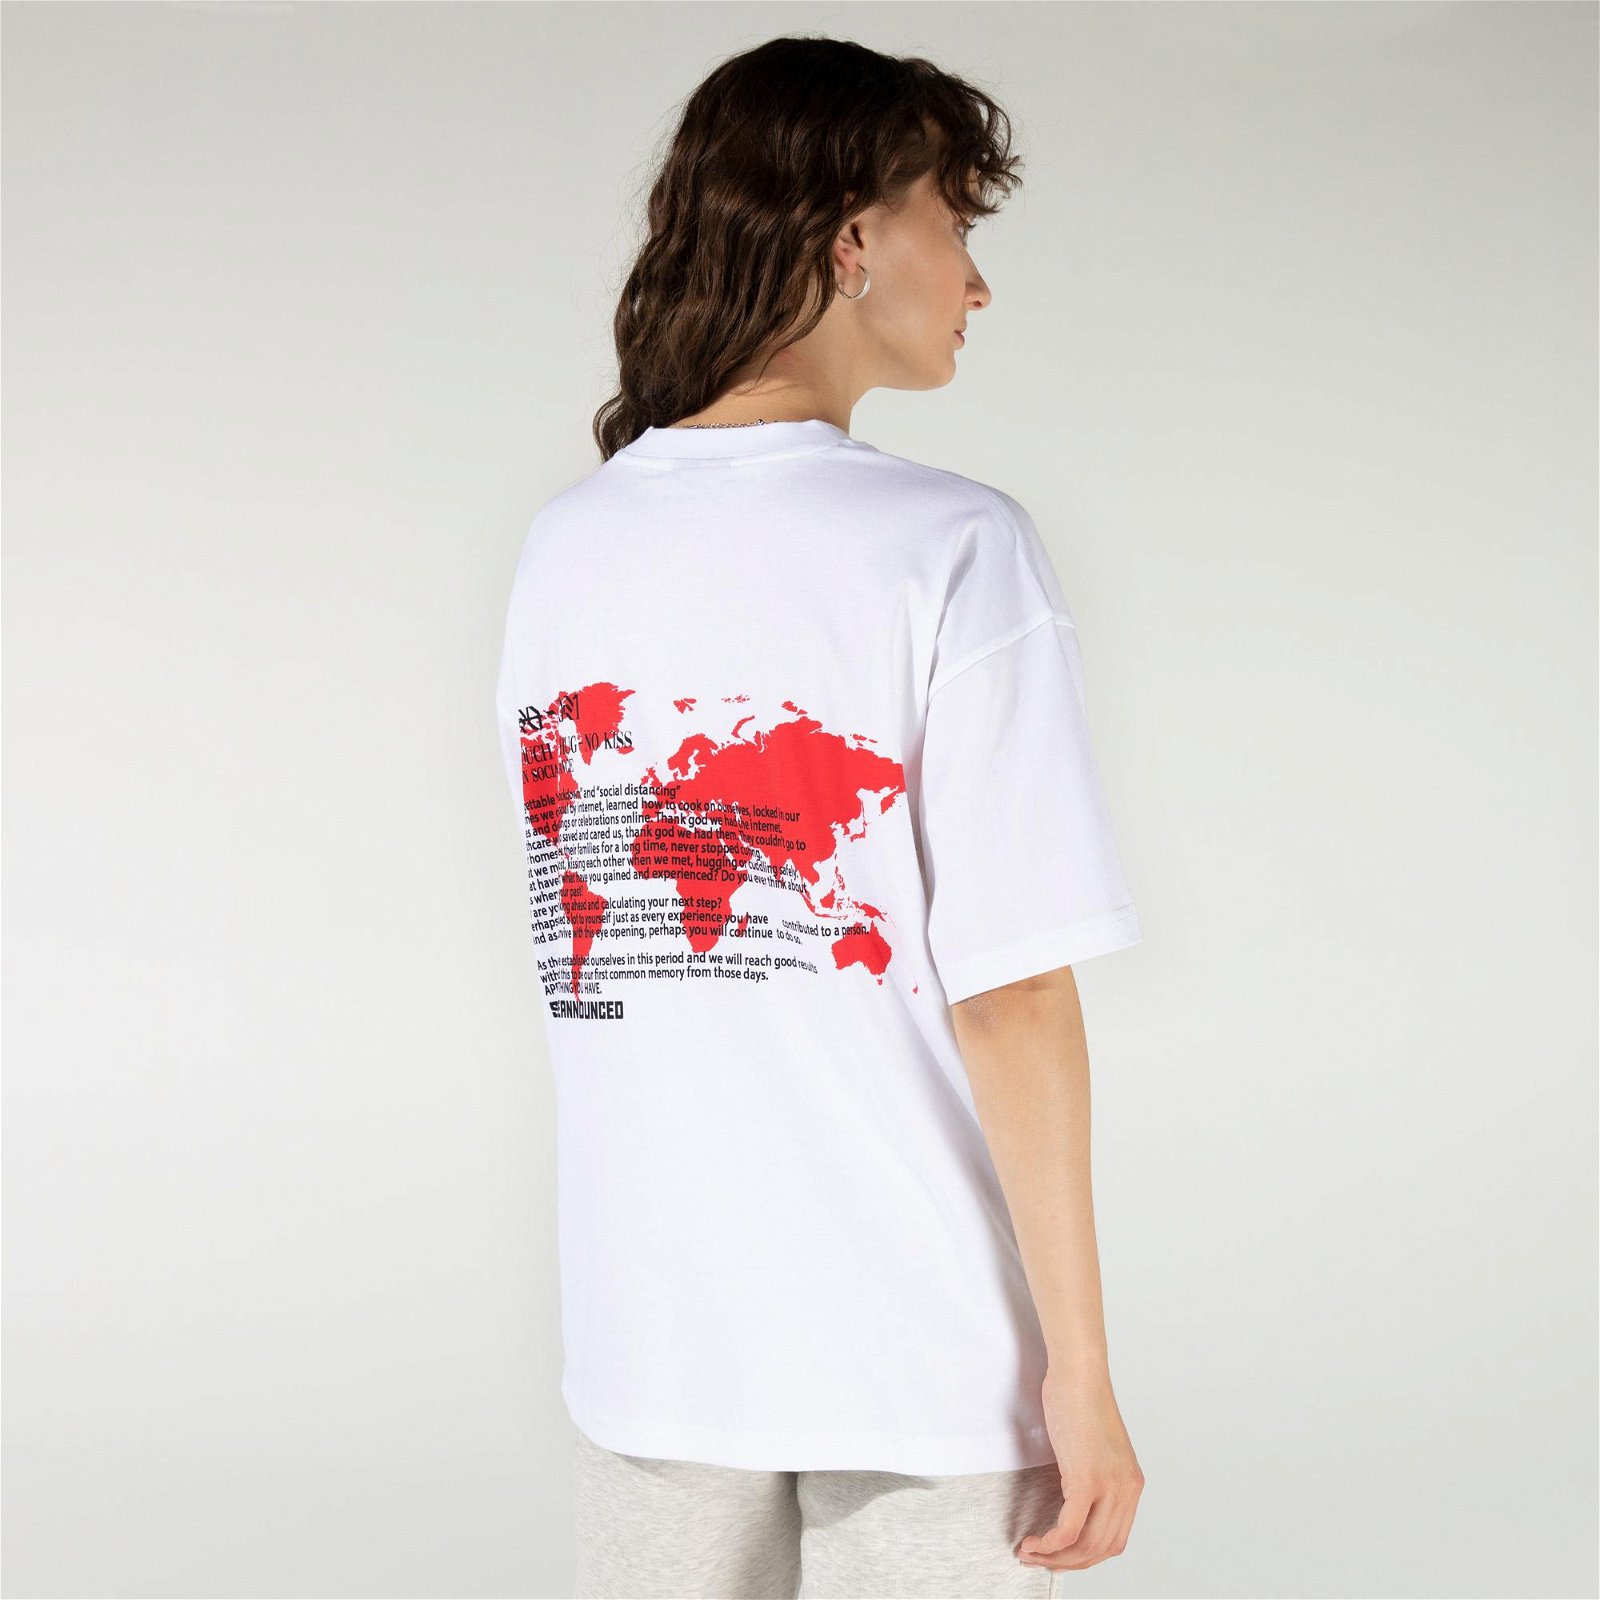 SOONTOBEANNOUNCED 2020-2021 Printed Unisex Beyaz T-Shirt